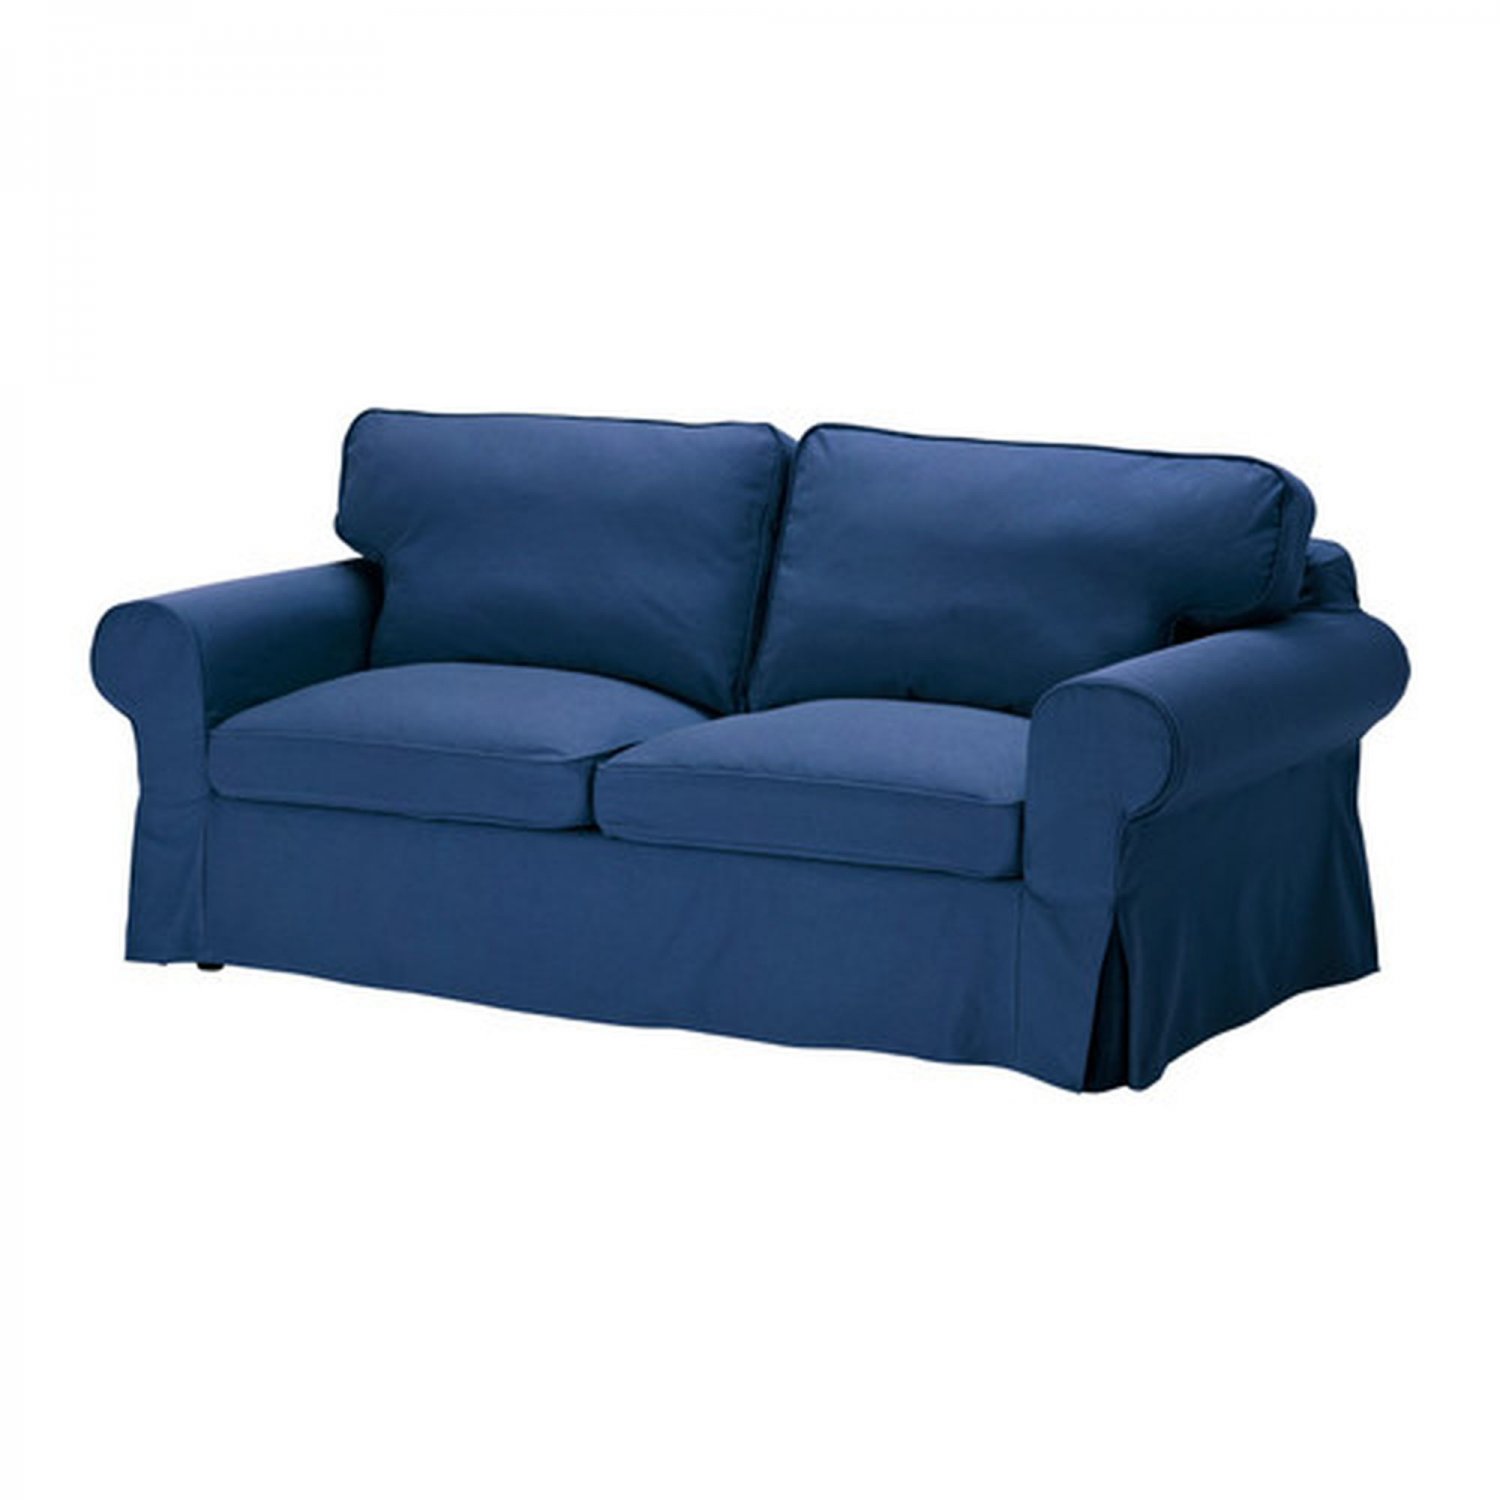 IKEA EKTORP 2 Seat Sofa COVER Loveseat Slipcover IDEMO BLUE